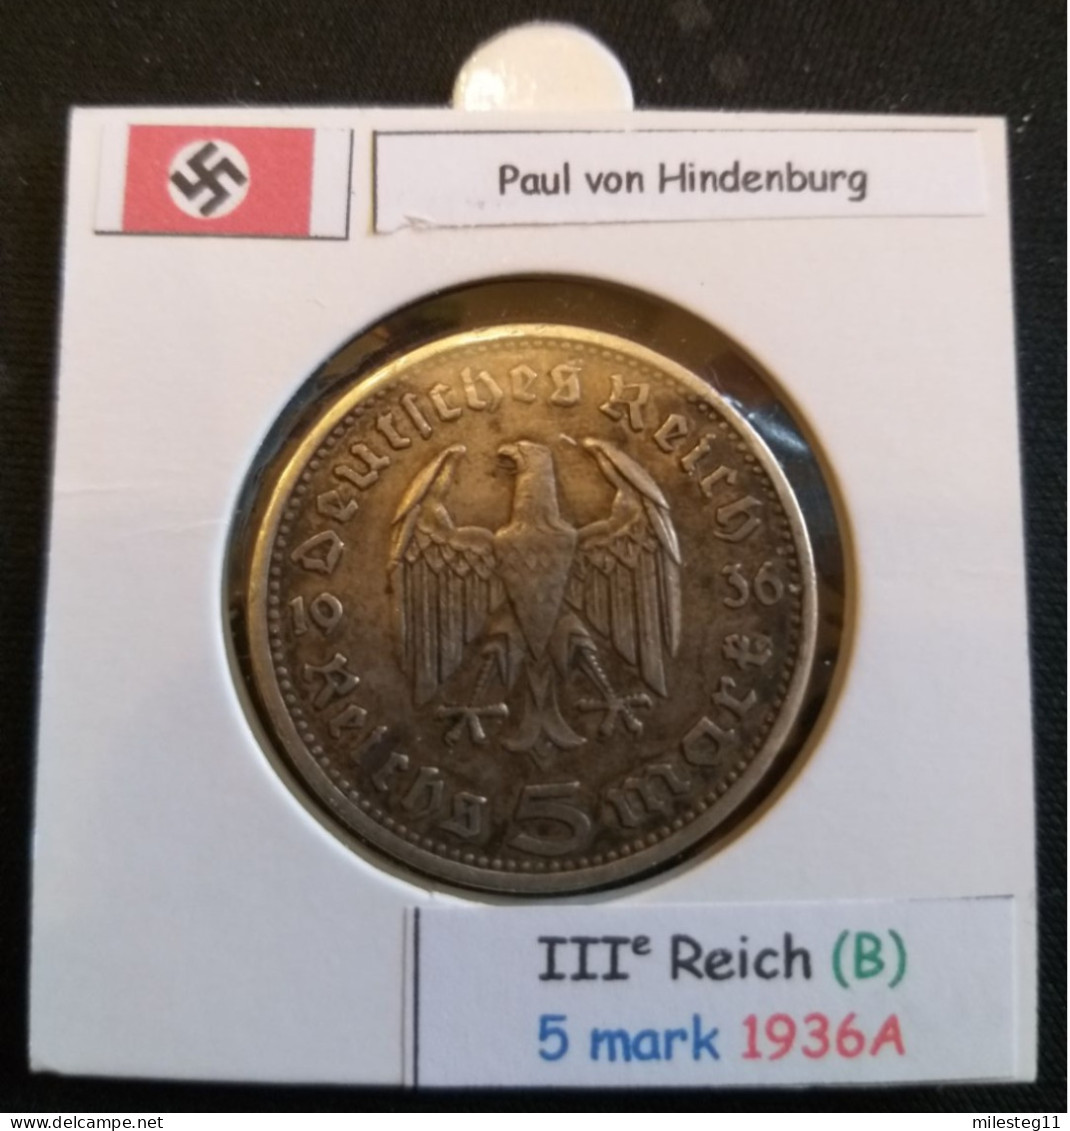 Pièce De 5 Reichsmark De 1936A (Berlin) Paul Von Hindenburg (position B) - 5 Reichsmark